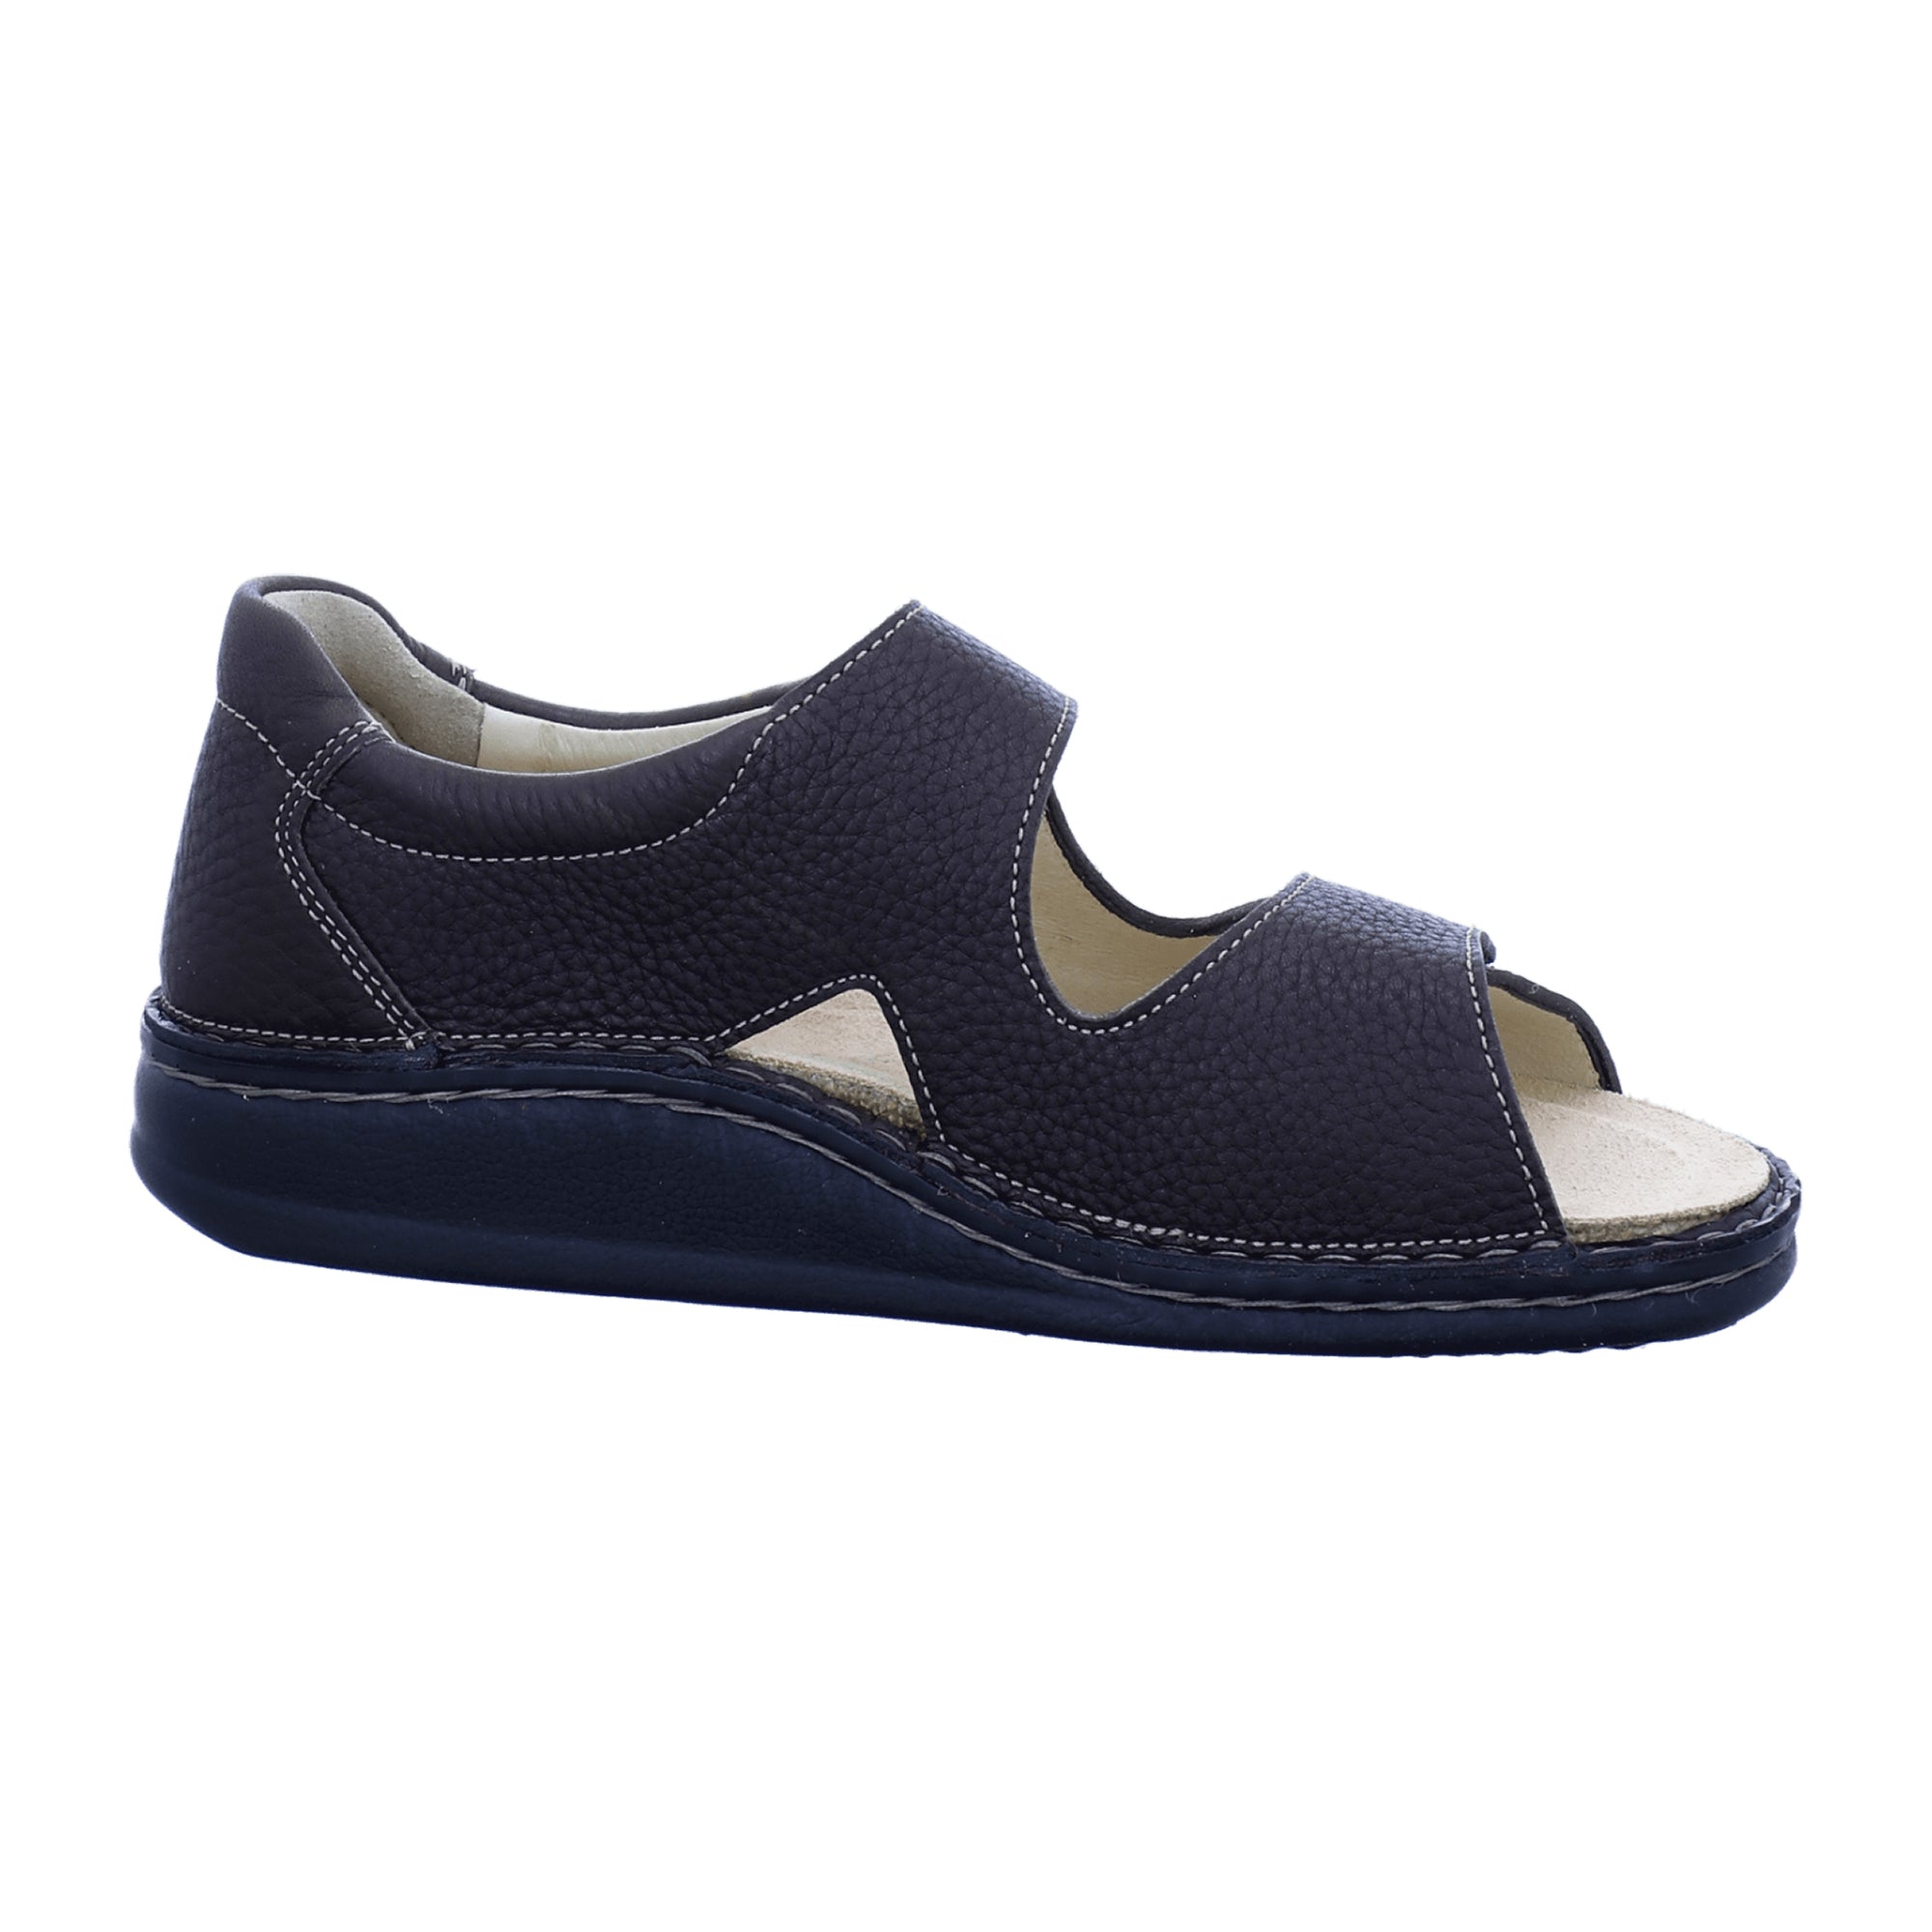 Finn Comfort Argos-S Men's Comfort Sandals, Stylish Brown Leather